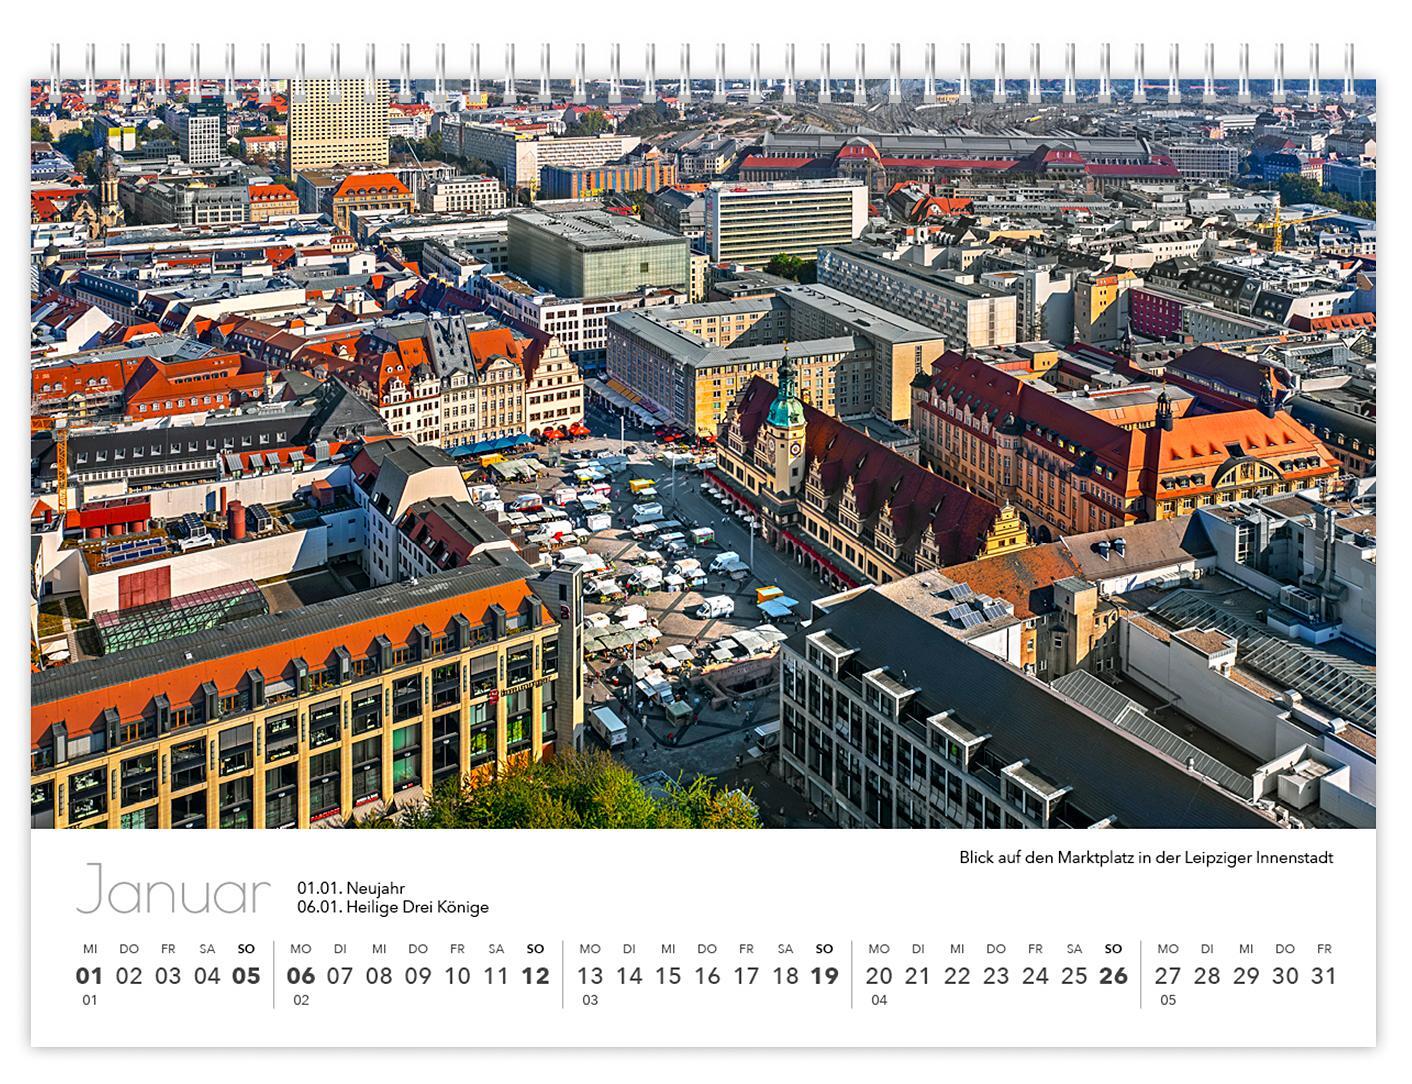 Bild: 9783910680814 | Kalender Leipzig kompakt 2025 | 21 x 15 cm weißes Kalendarium | 2025